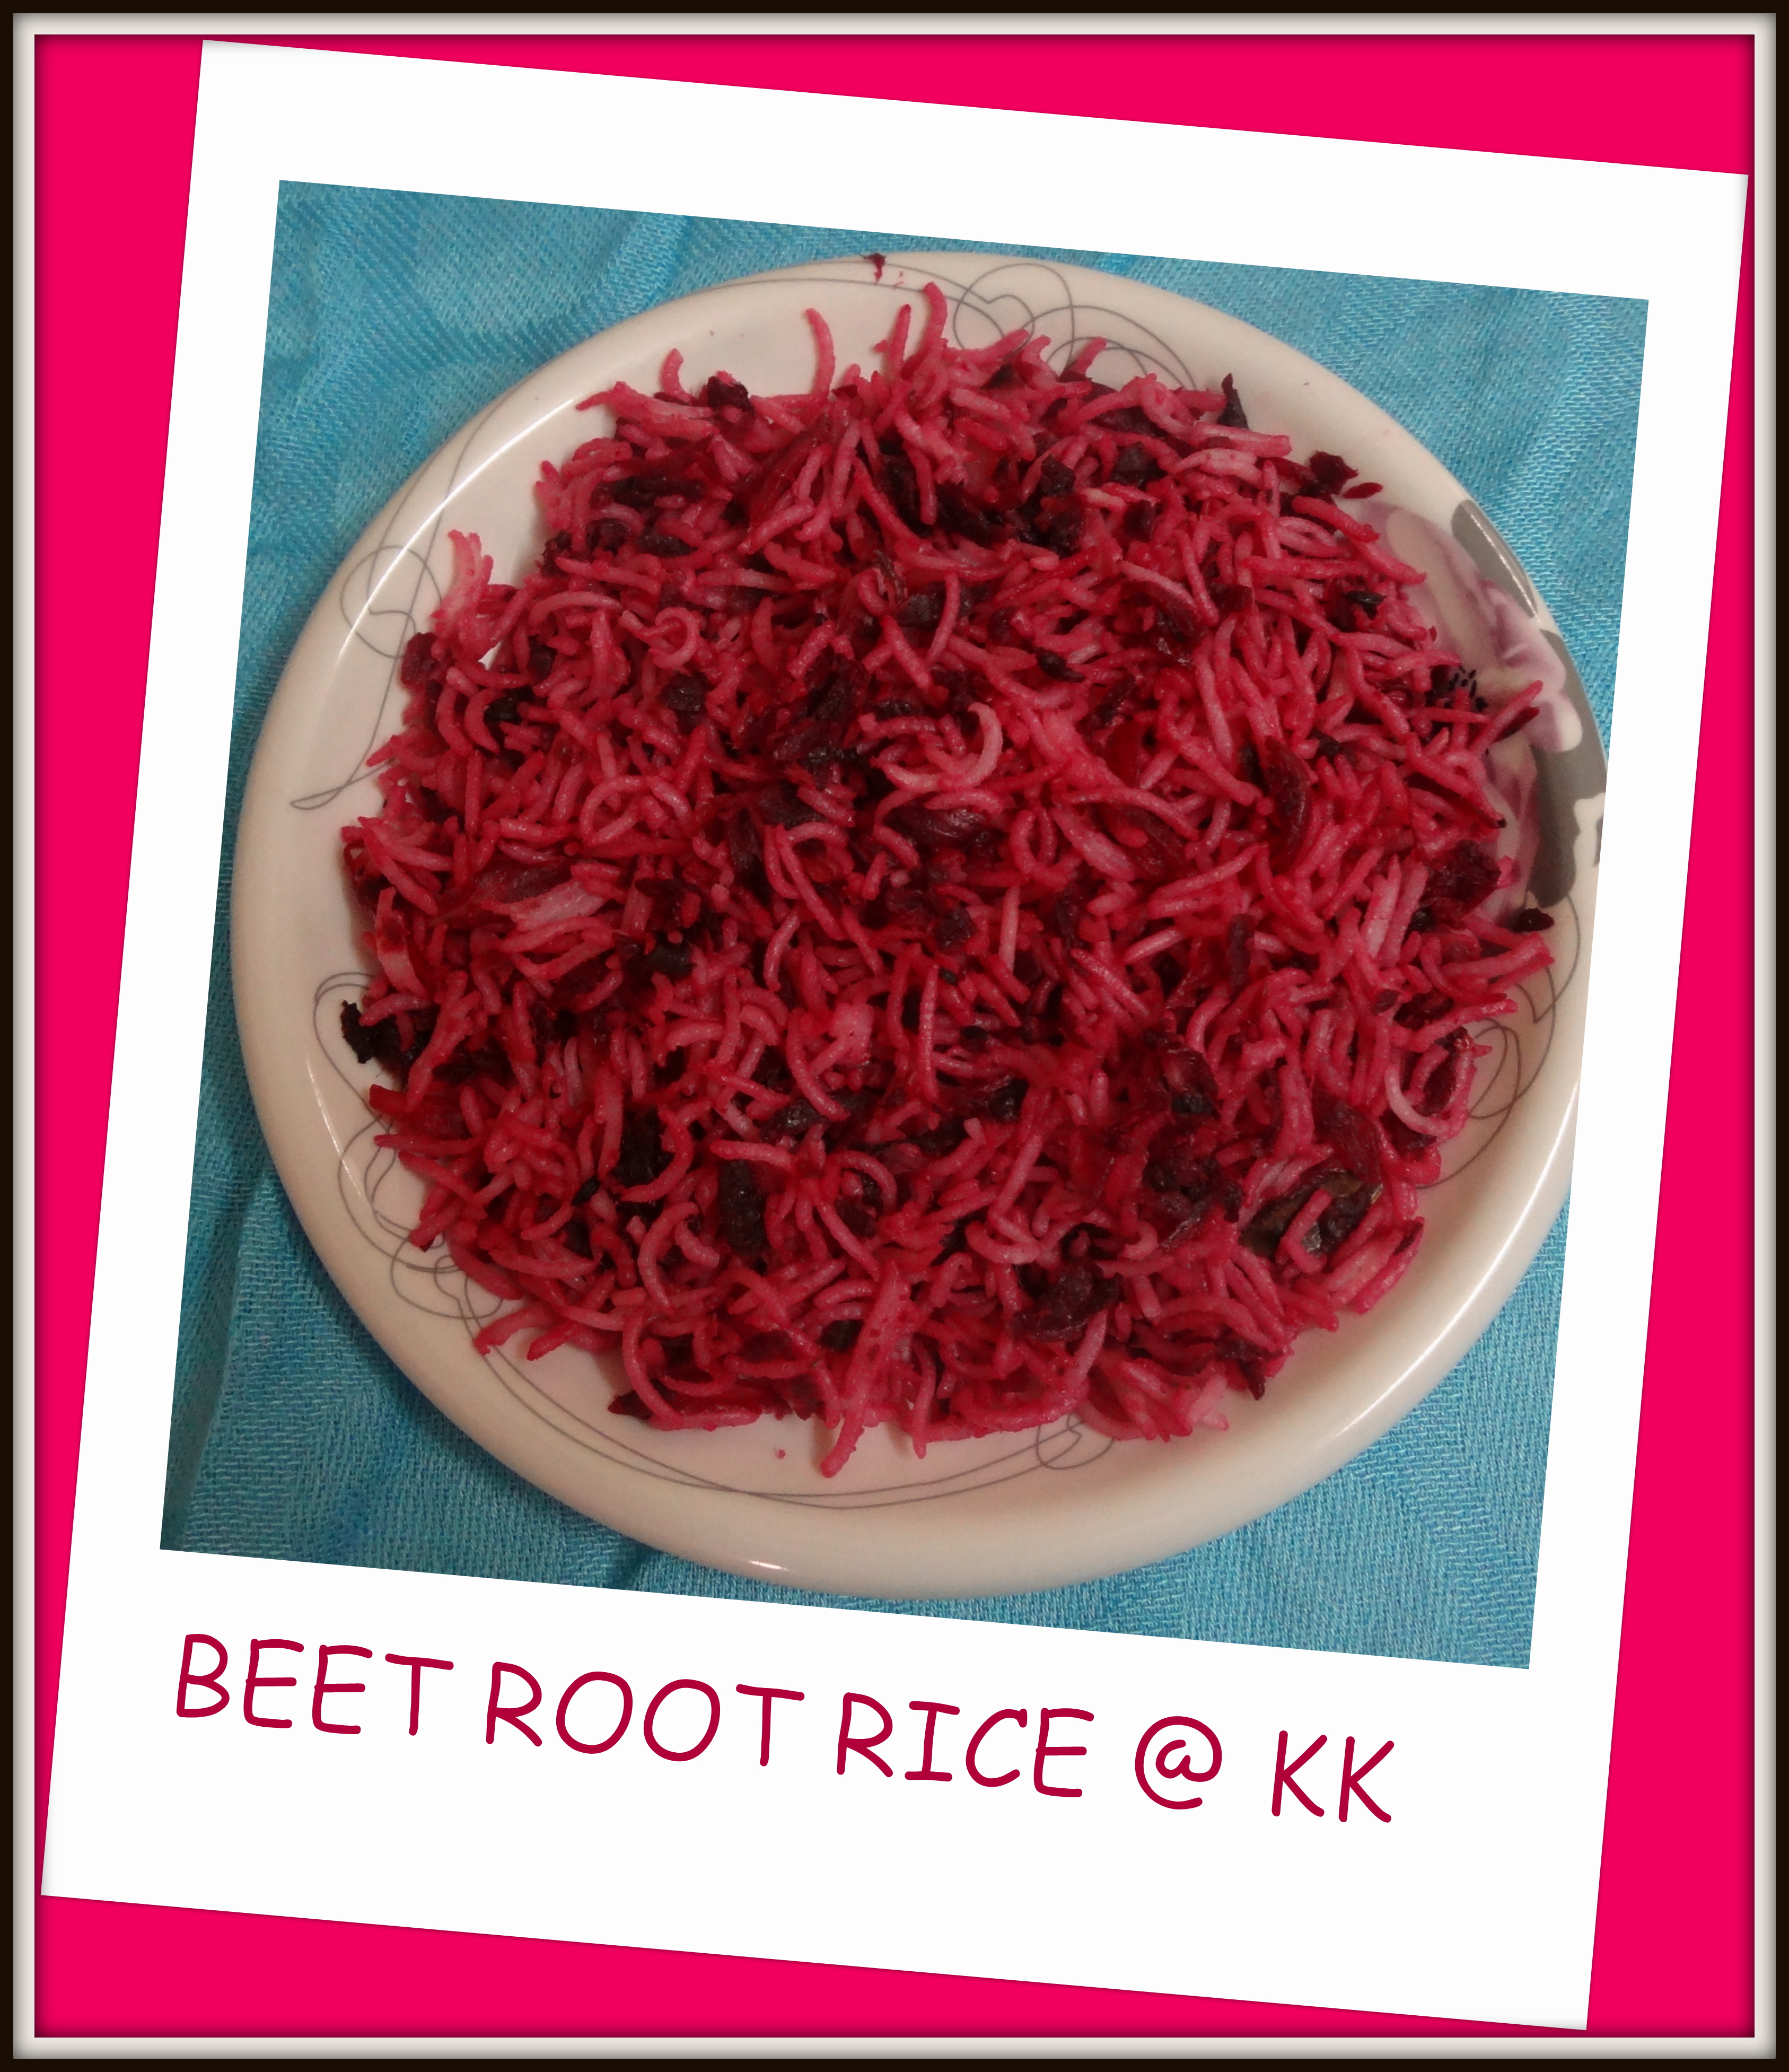 Beet root rice